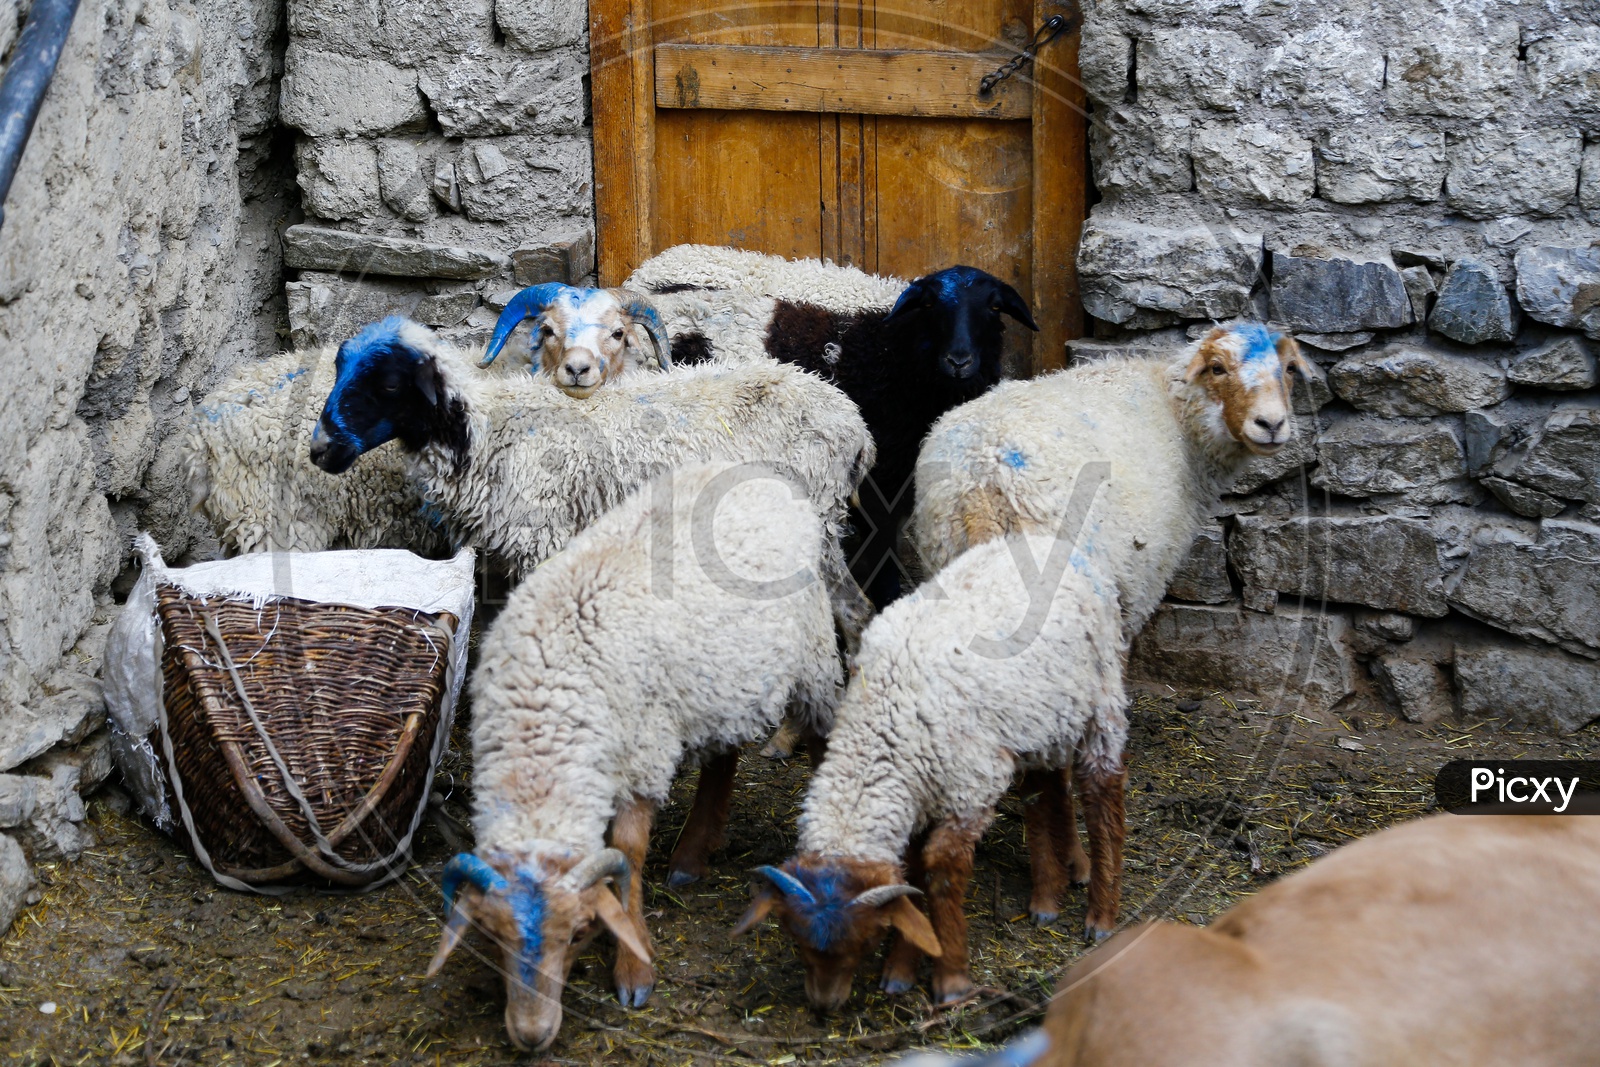 Sheeps, Kashmir